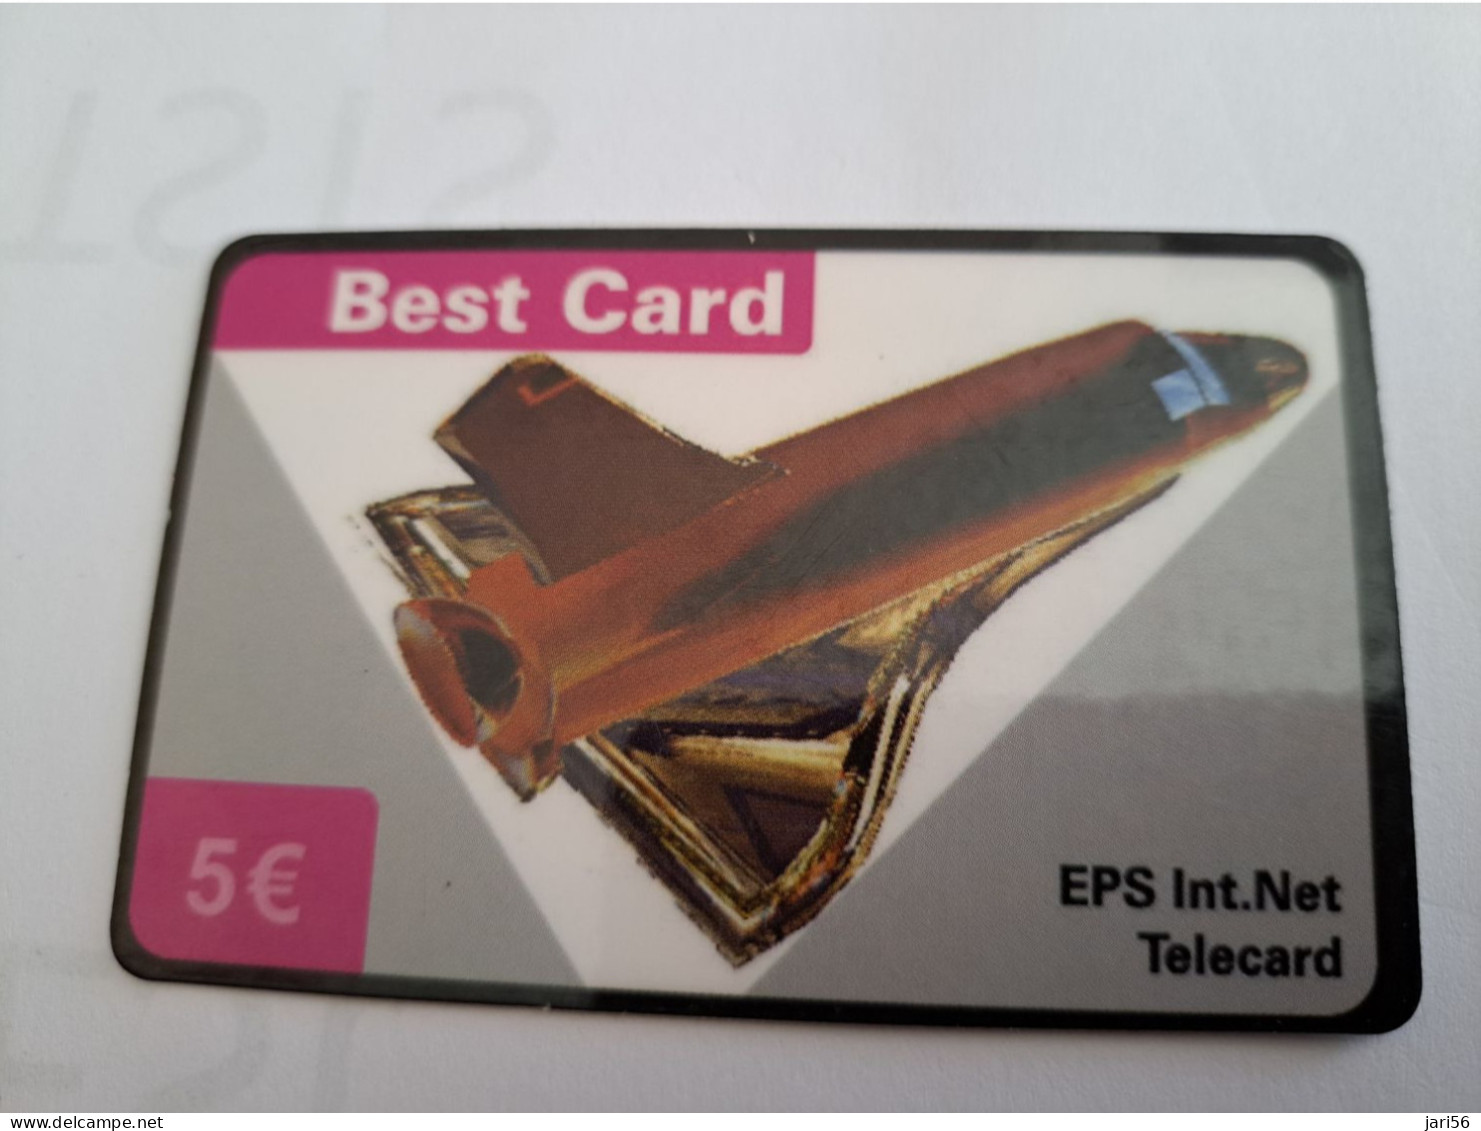 DUITSLAND/GERMANY  € 5,- / BEST CARD/ SPACE SHUTTLE   ON CARD        Fine Used  PREPAID  **16533** - Cellulari, Carte Prepagate E Ricariche